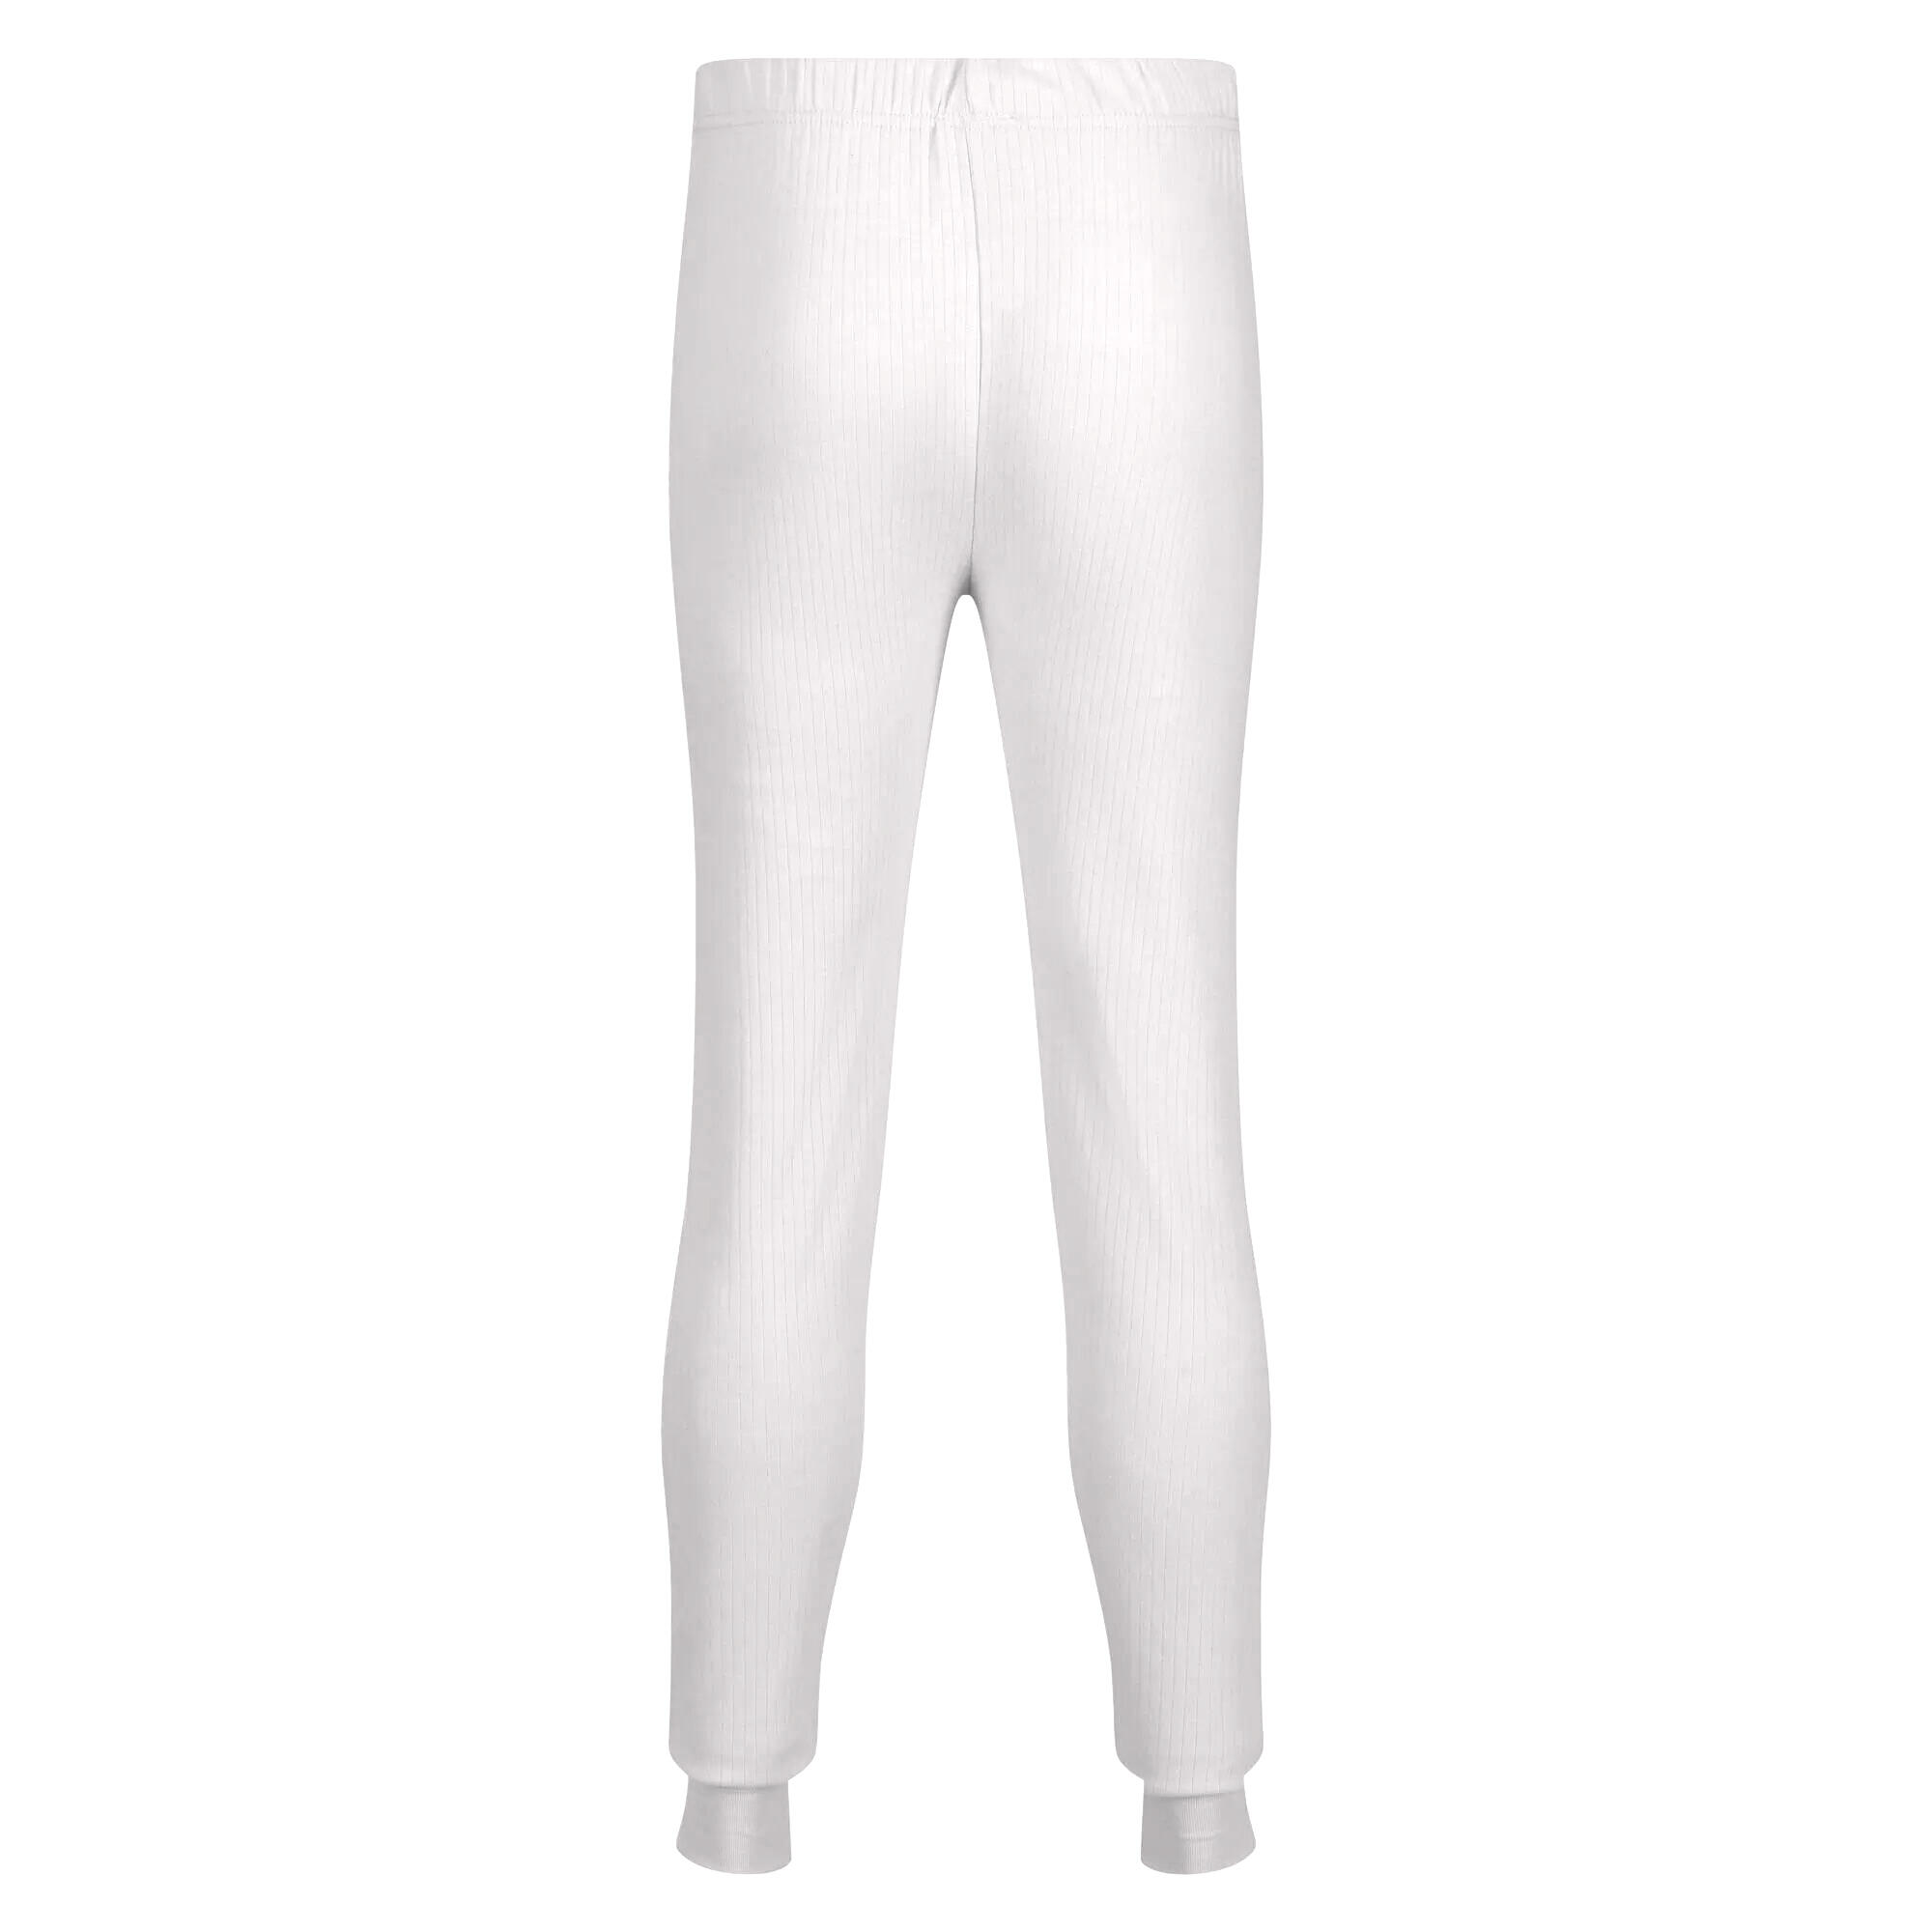 Mens Thermal Underwear Long Johns (White) 2/5